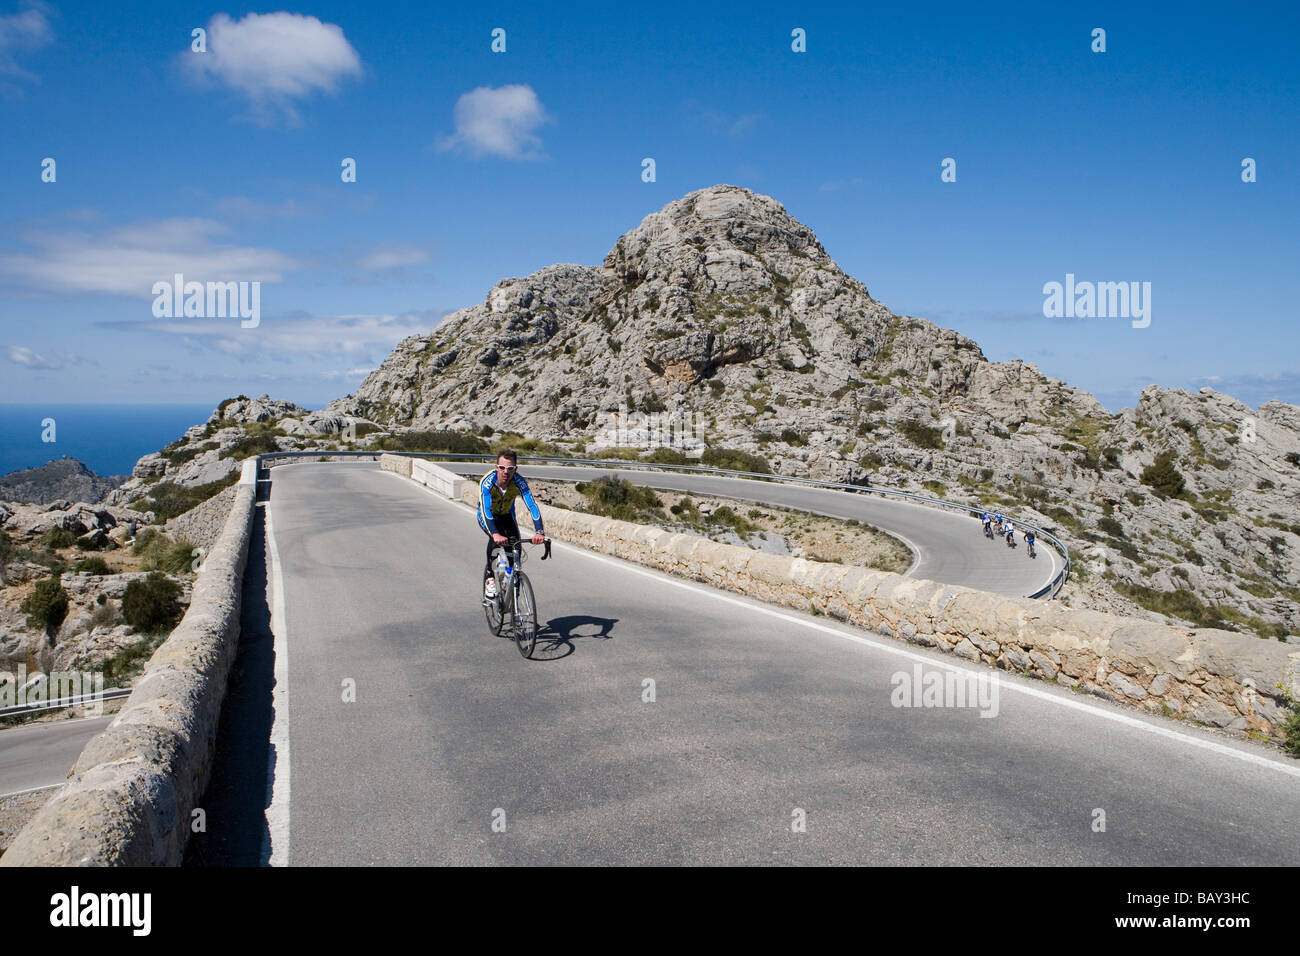 Cyclists on Sa Calobra Mountain Road, Near Cala de Sa Calobra, Mallorca, Balearic Islands, Spain Stock Photo